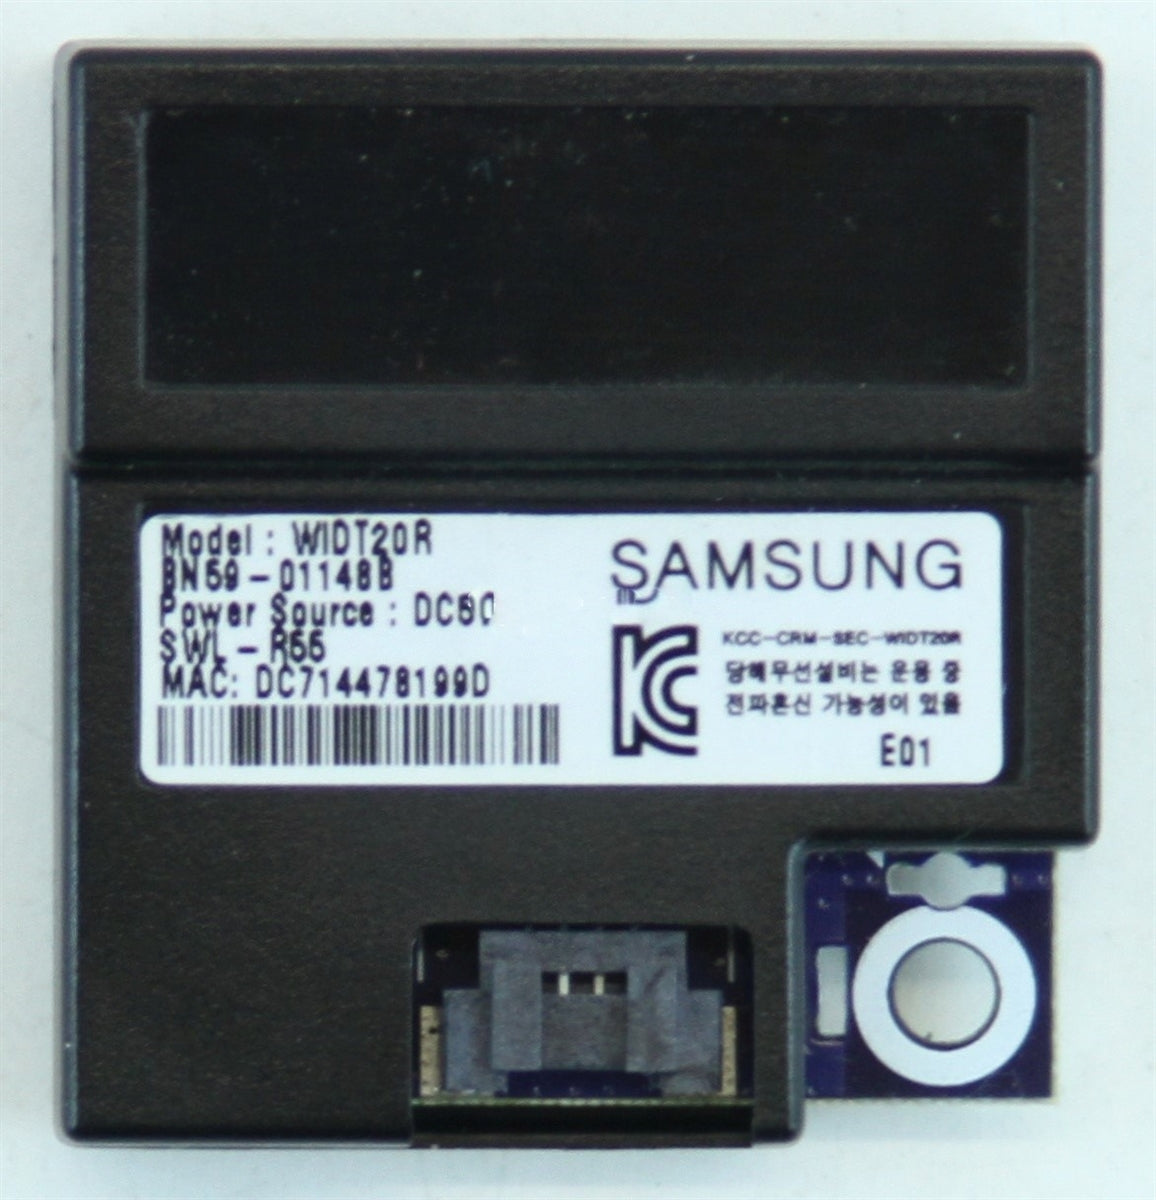 BN59-01148B Samsung TV Module, Wi-Fi board, WIDT20R